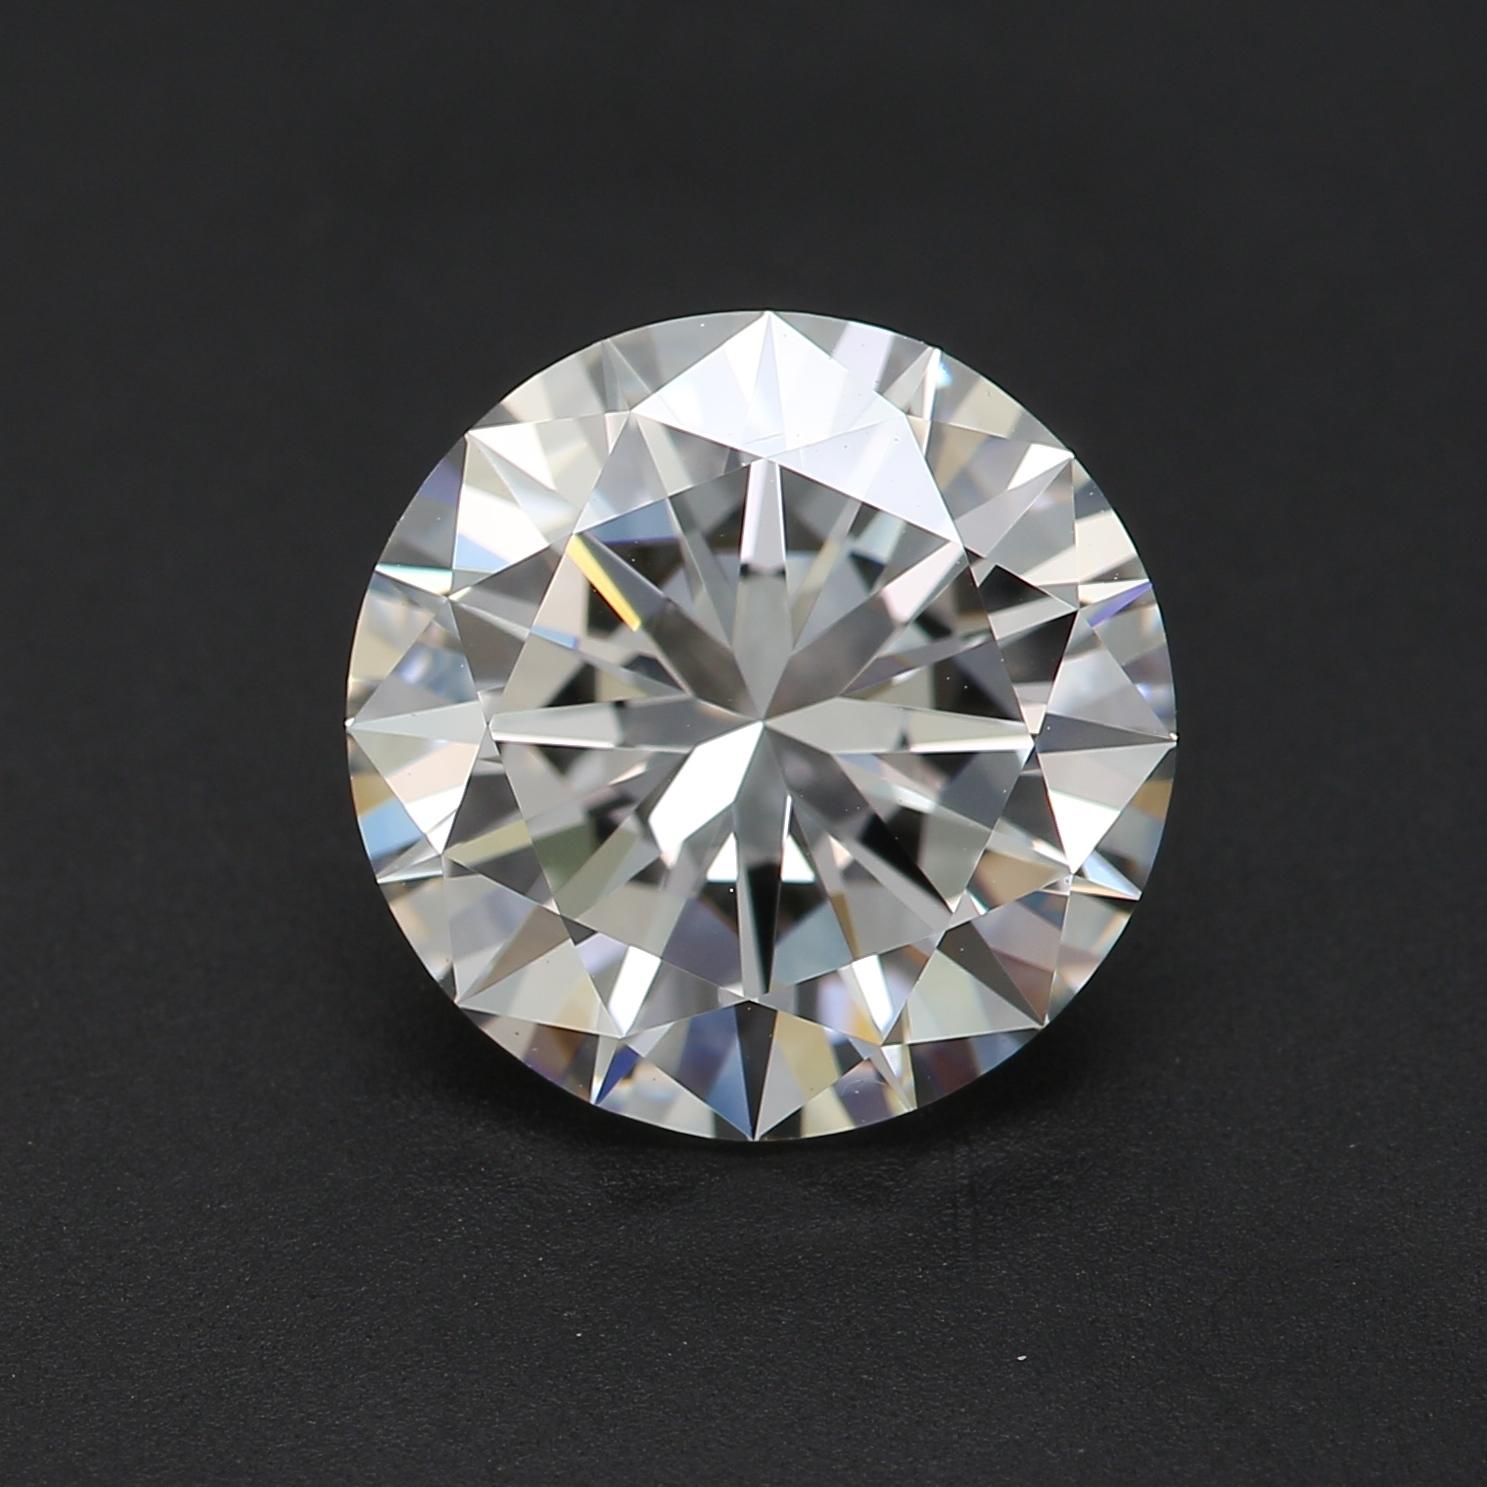 2.02 Carat Round Cut Diamond VVS1 Clarity GIA Certified For Sale 2